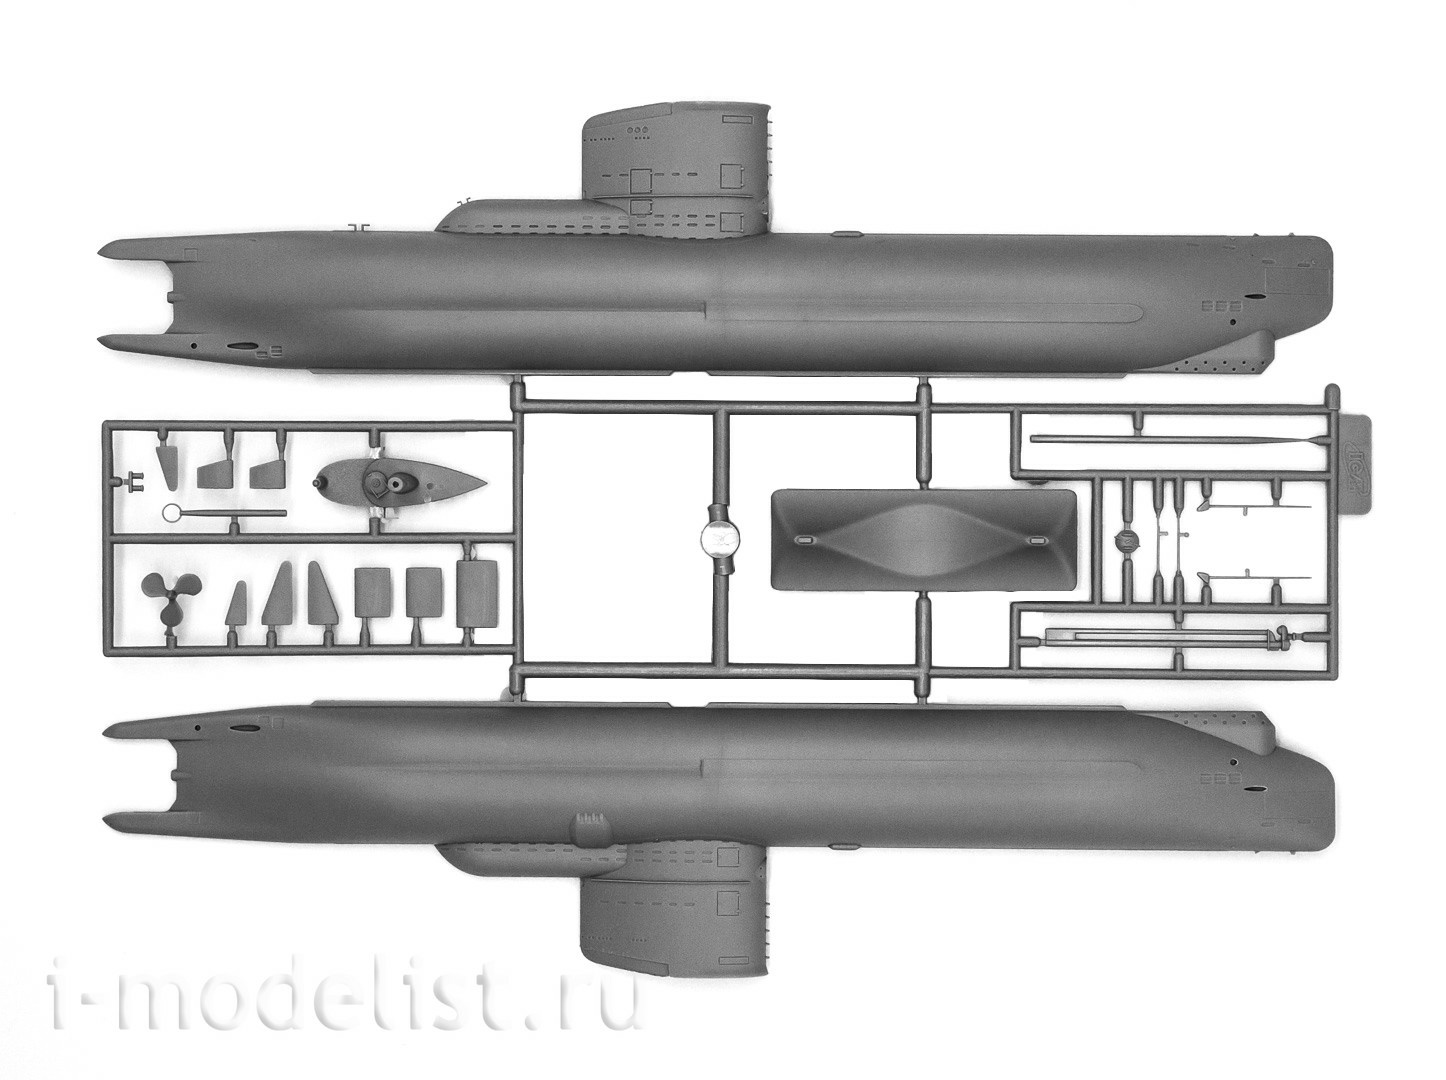 S. 004 ICM 1/144 German submarine, type XXIII